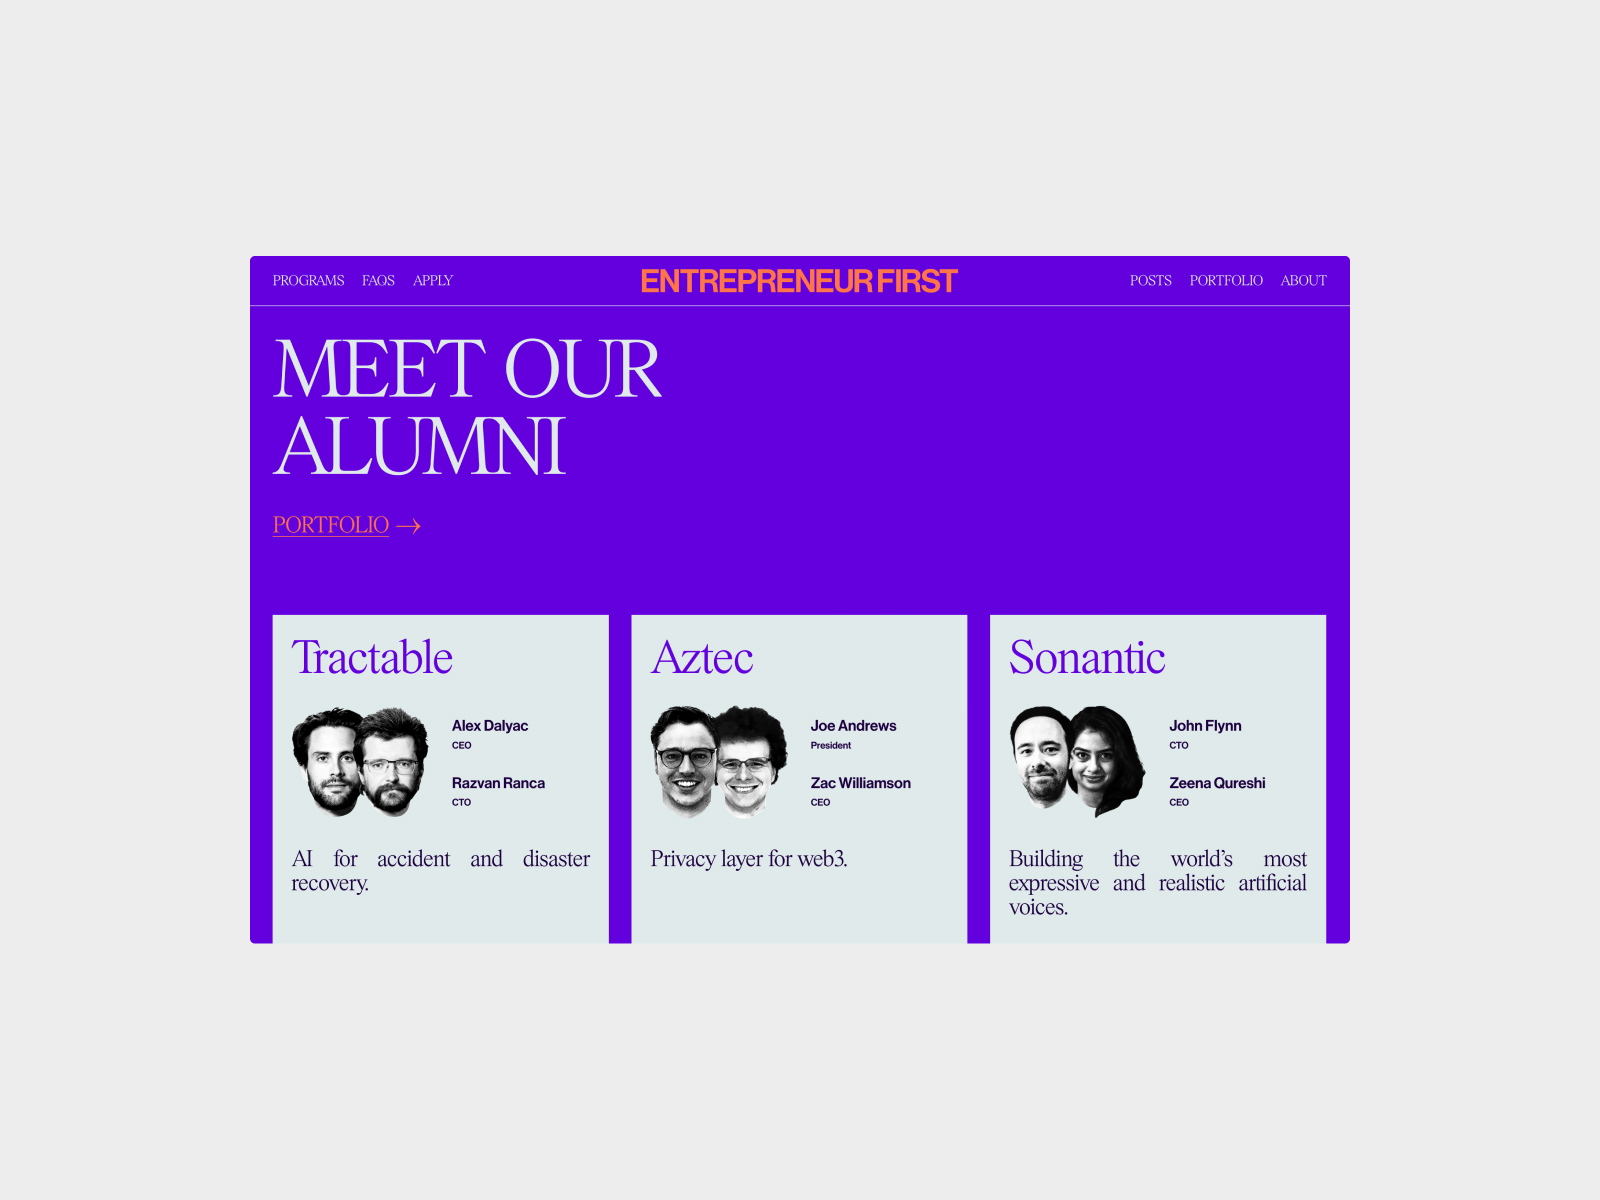 Alumni profile highlights